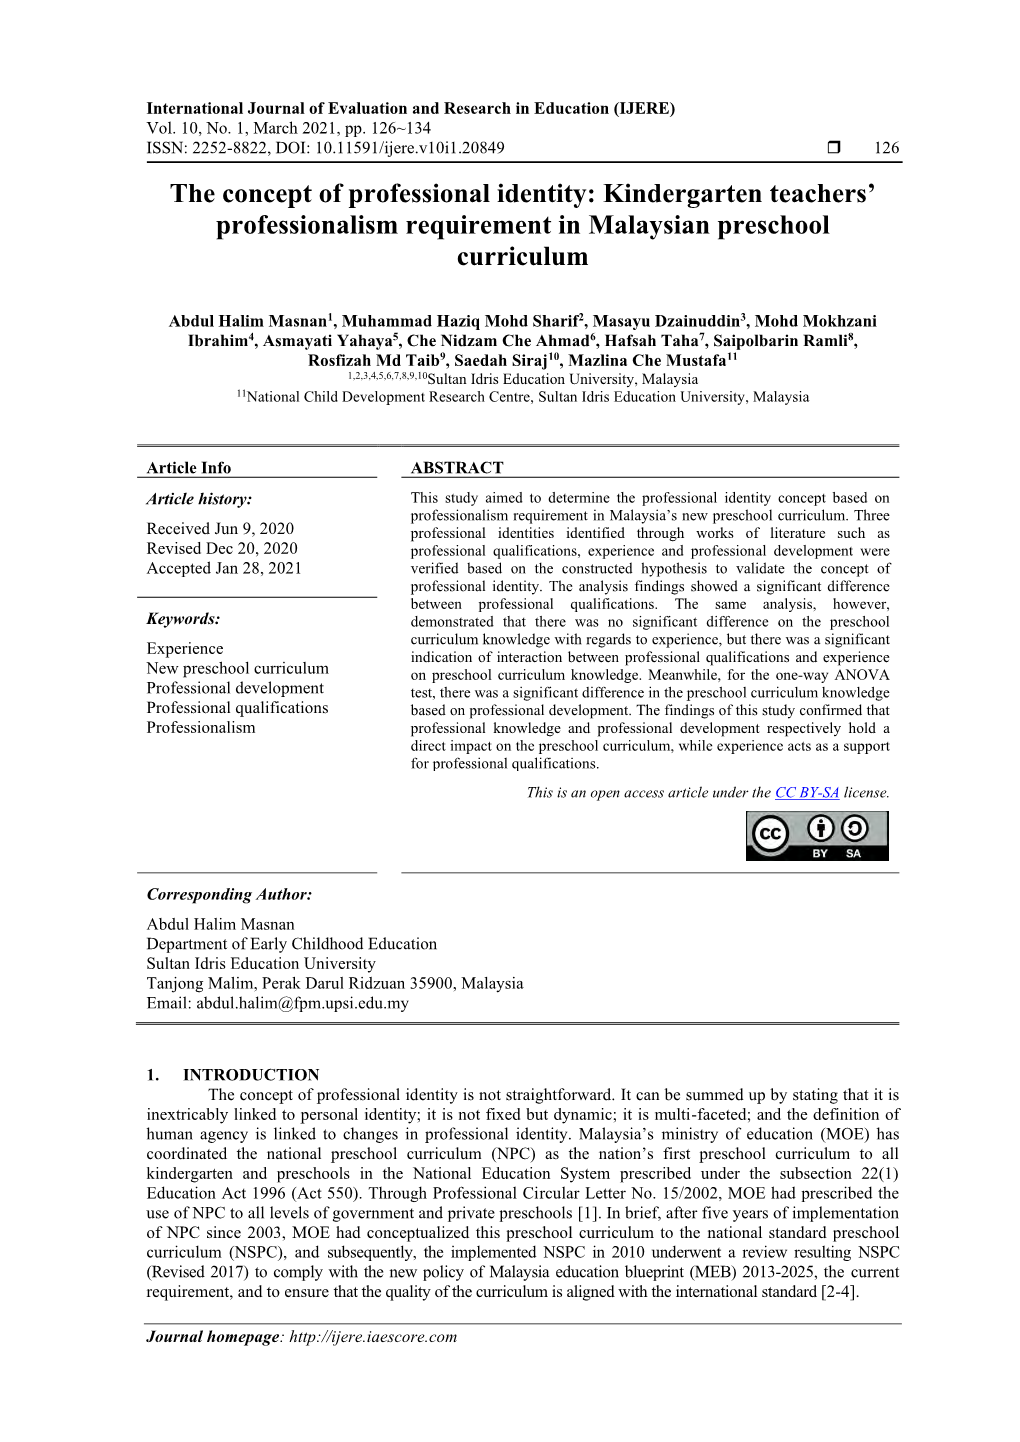 Kindergarten Teachers' Professionalism Requirement in Malaysian Preschool Curricul